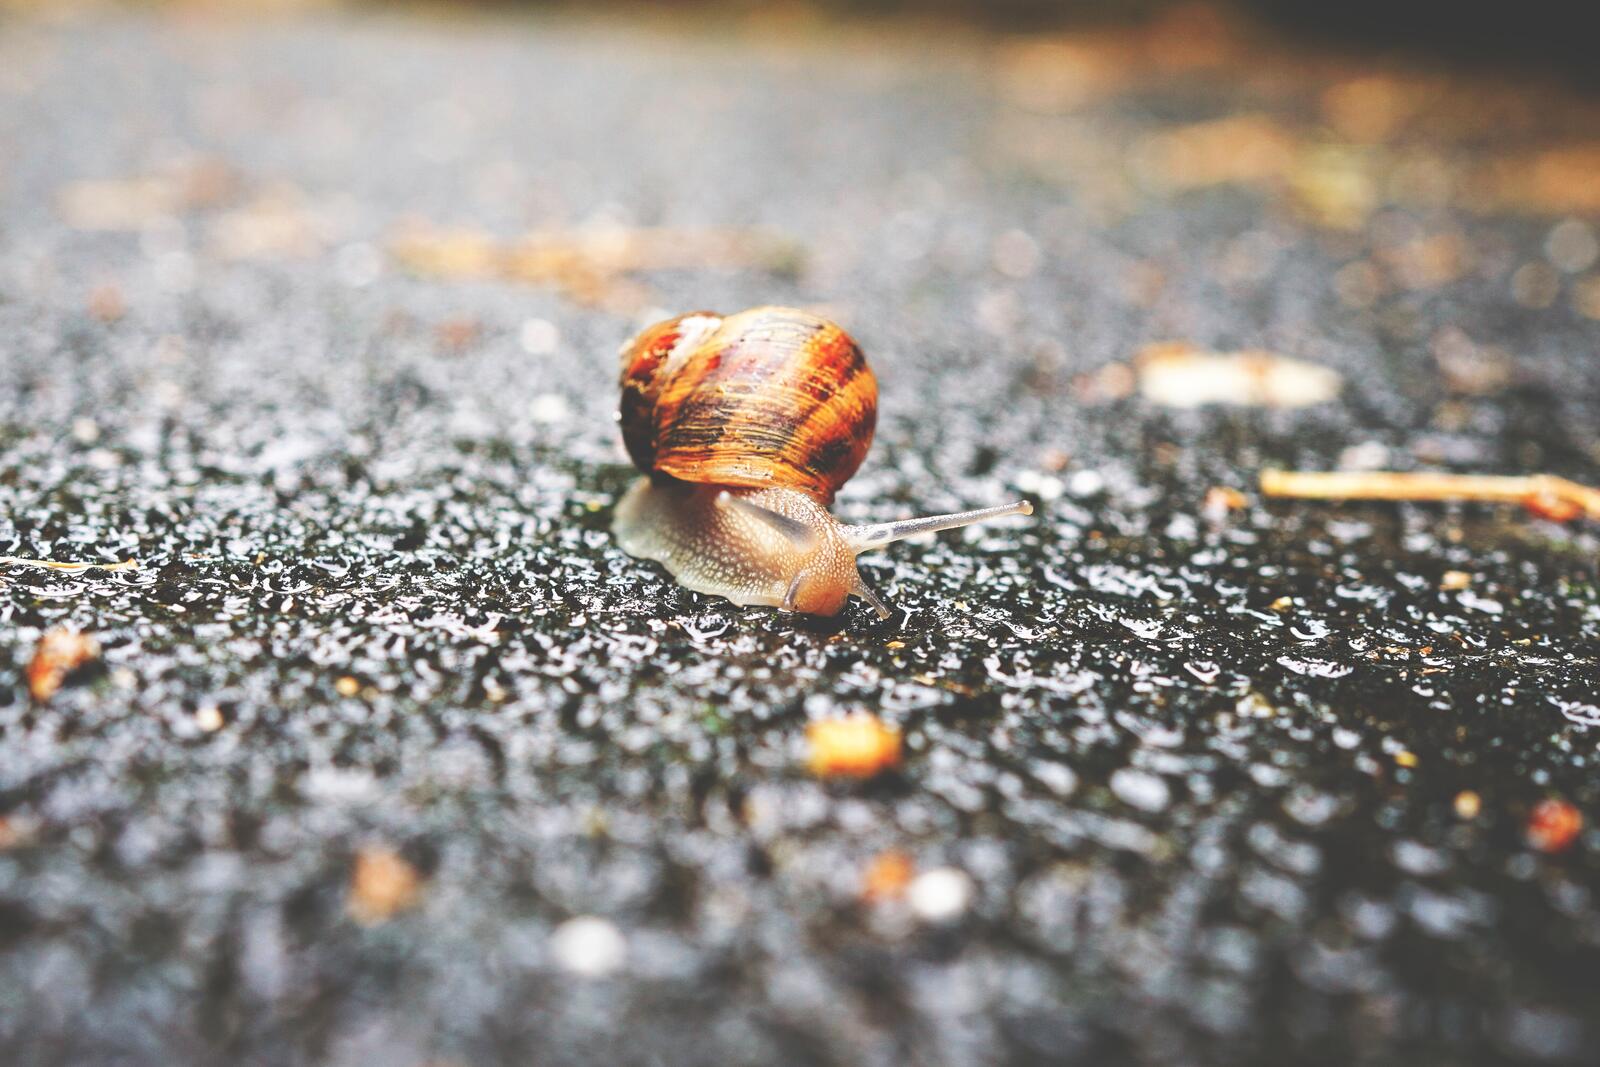 Free photo A snail on wet pavement.